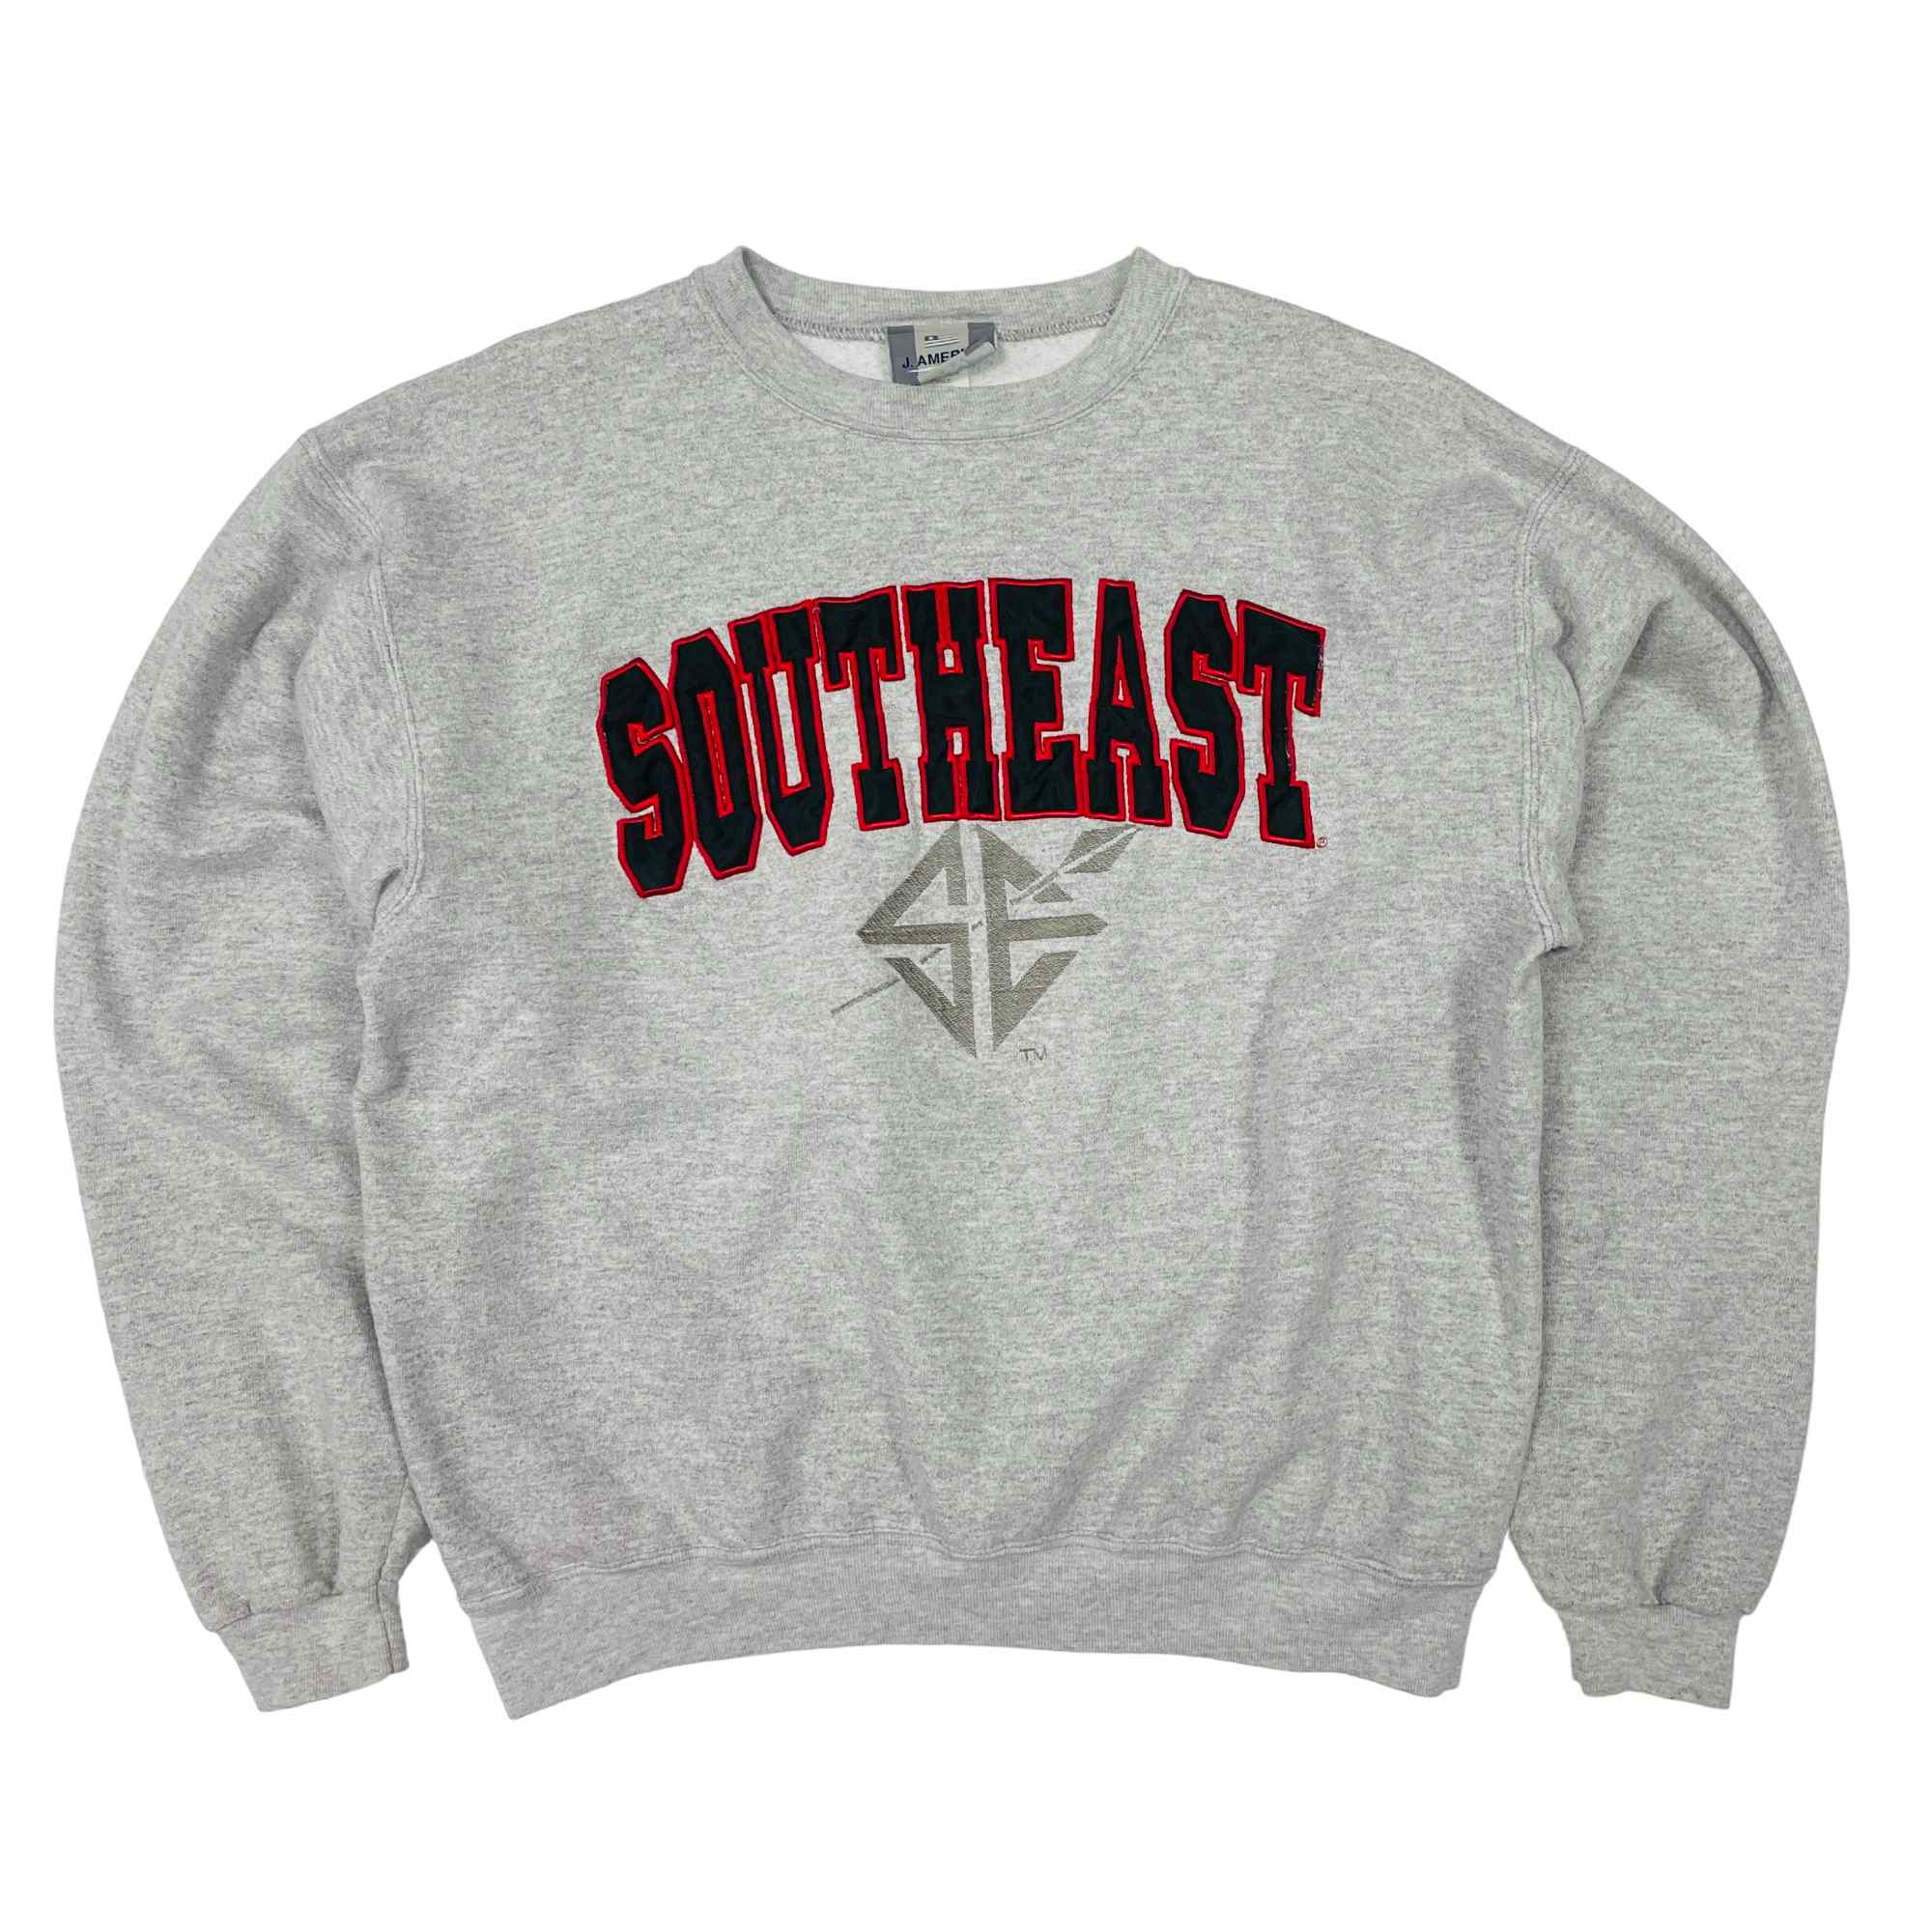 Southeast Sweatshirt - Medium